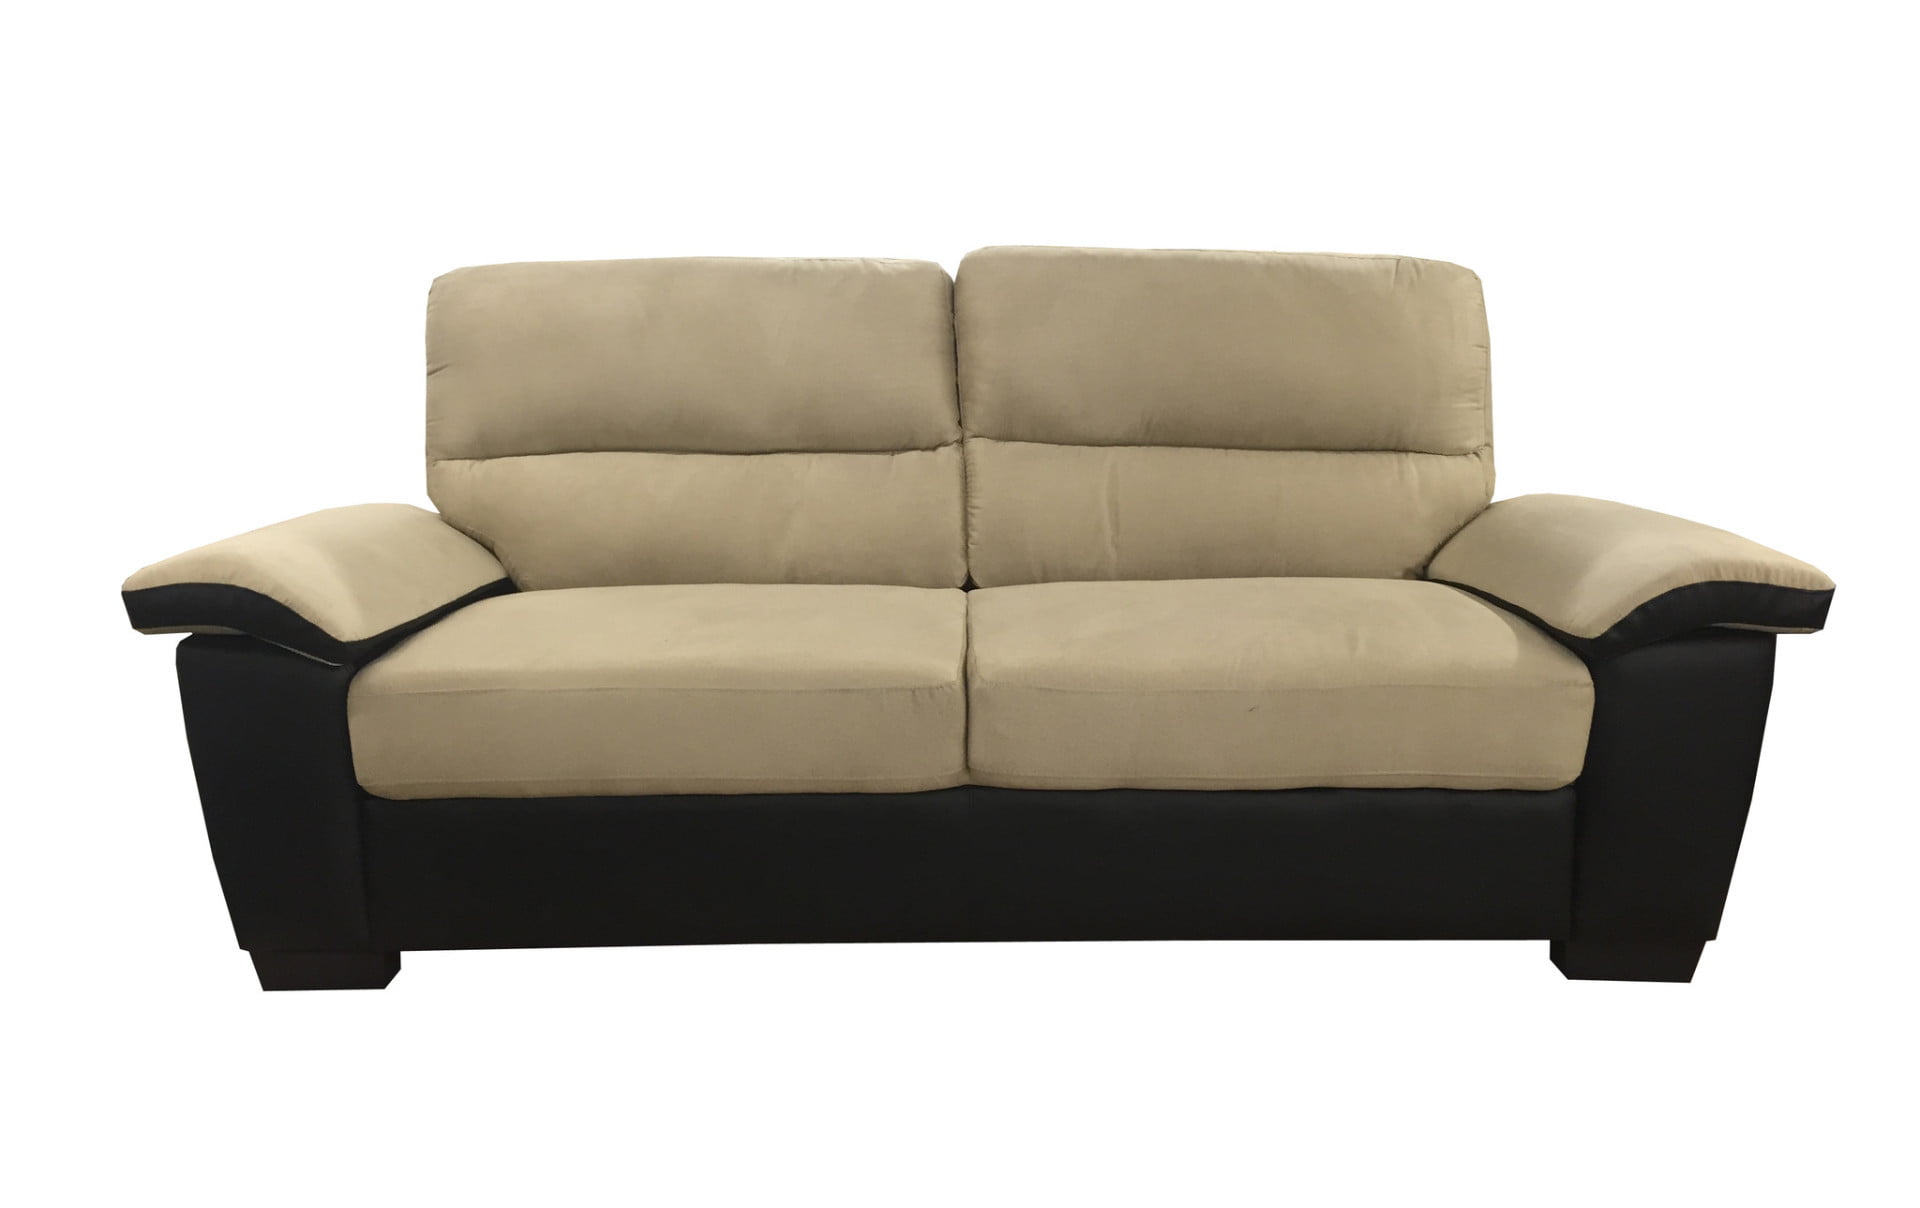 clean microfiber leather brown sofa